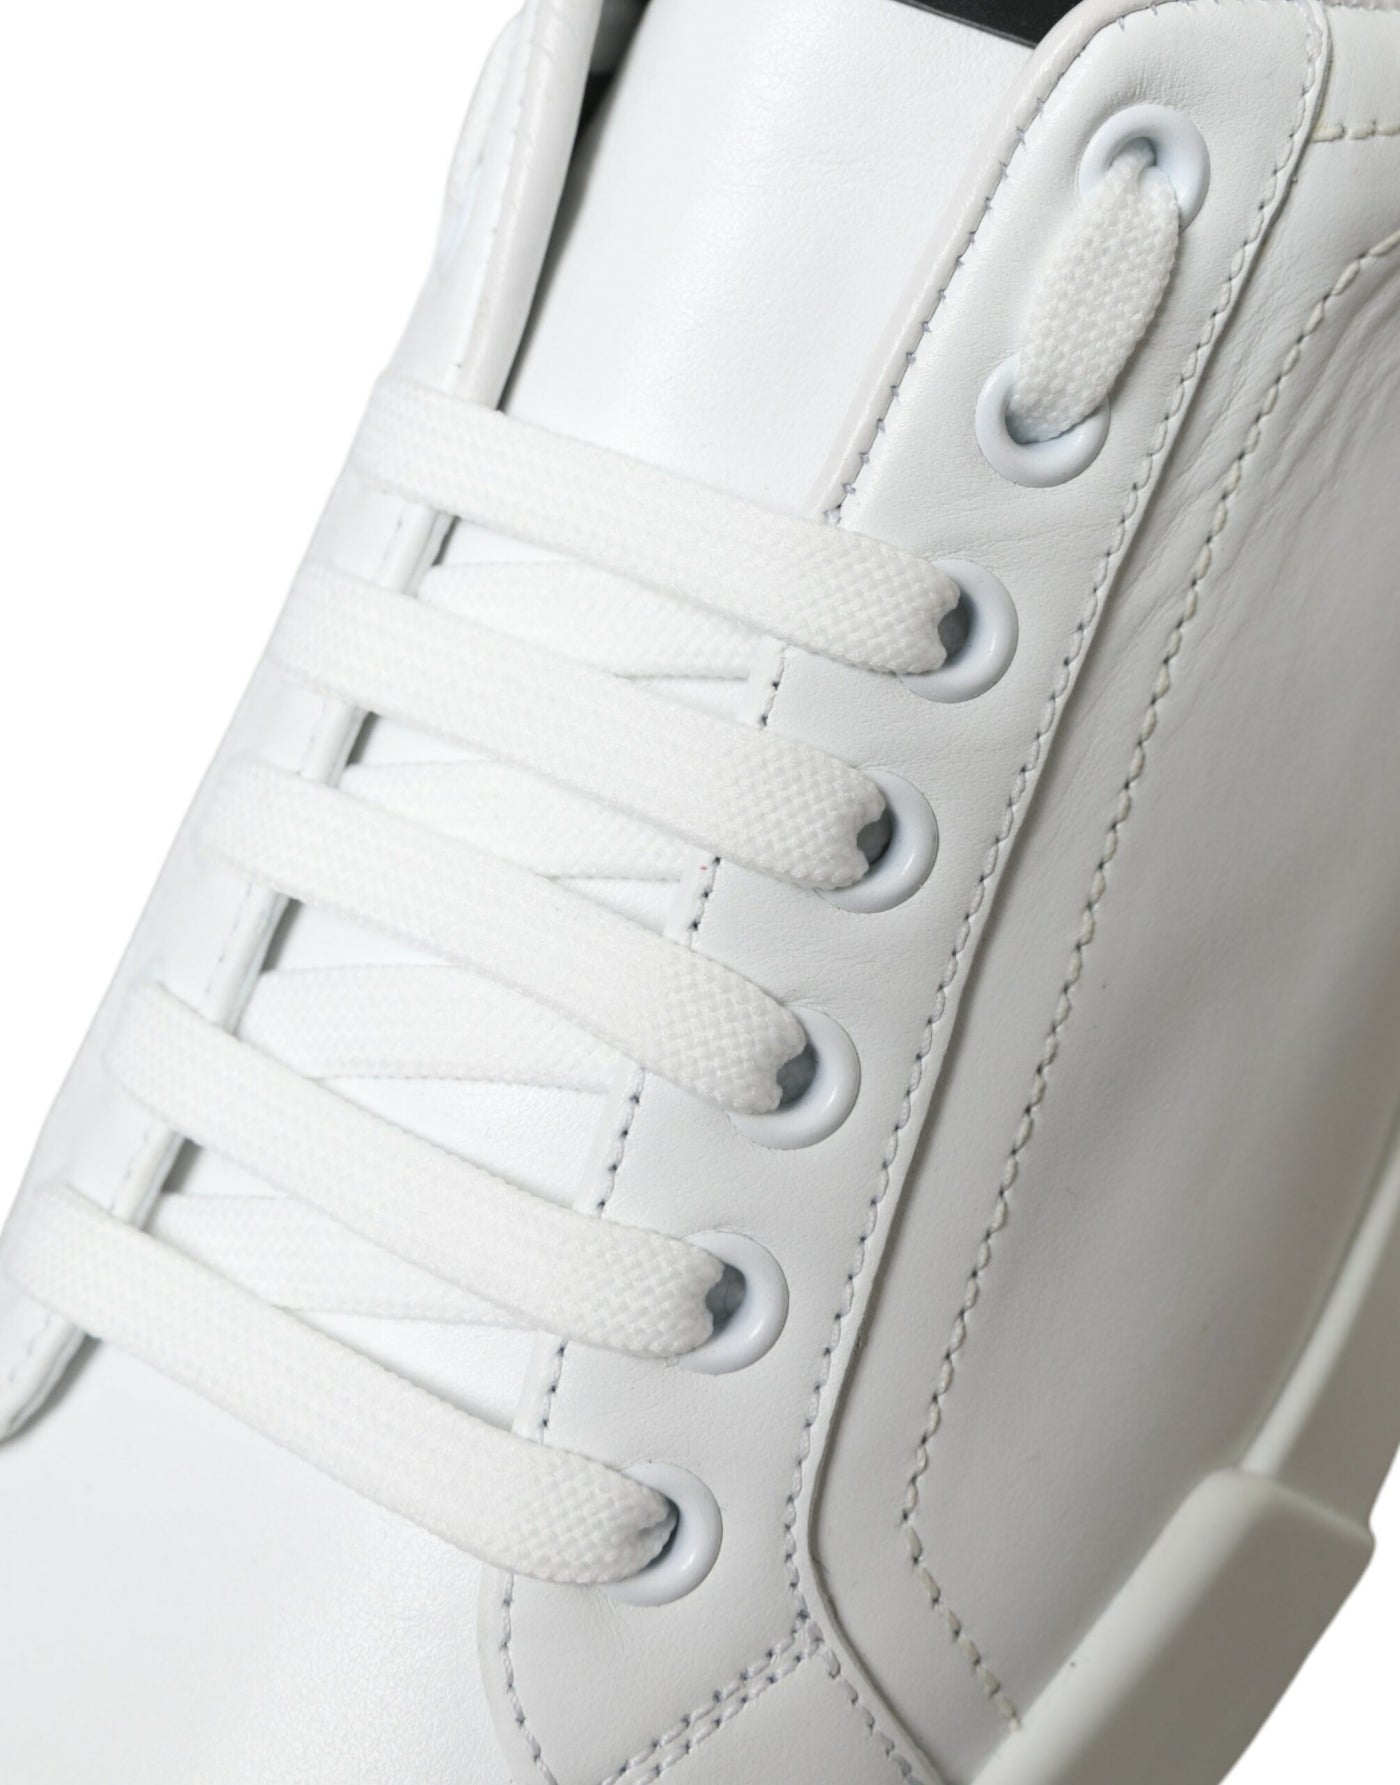 Dolce & Gabbana White Green Leather Portofino Sneakers Shoes